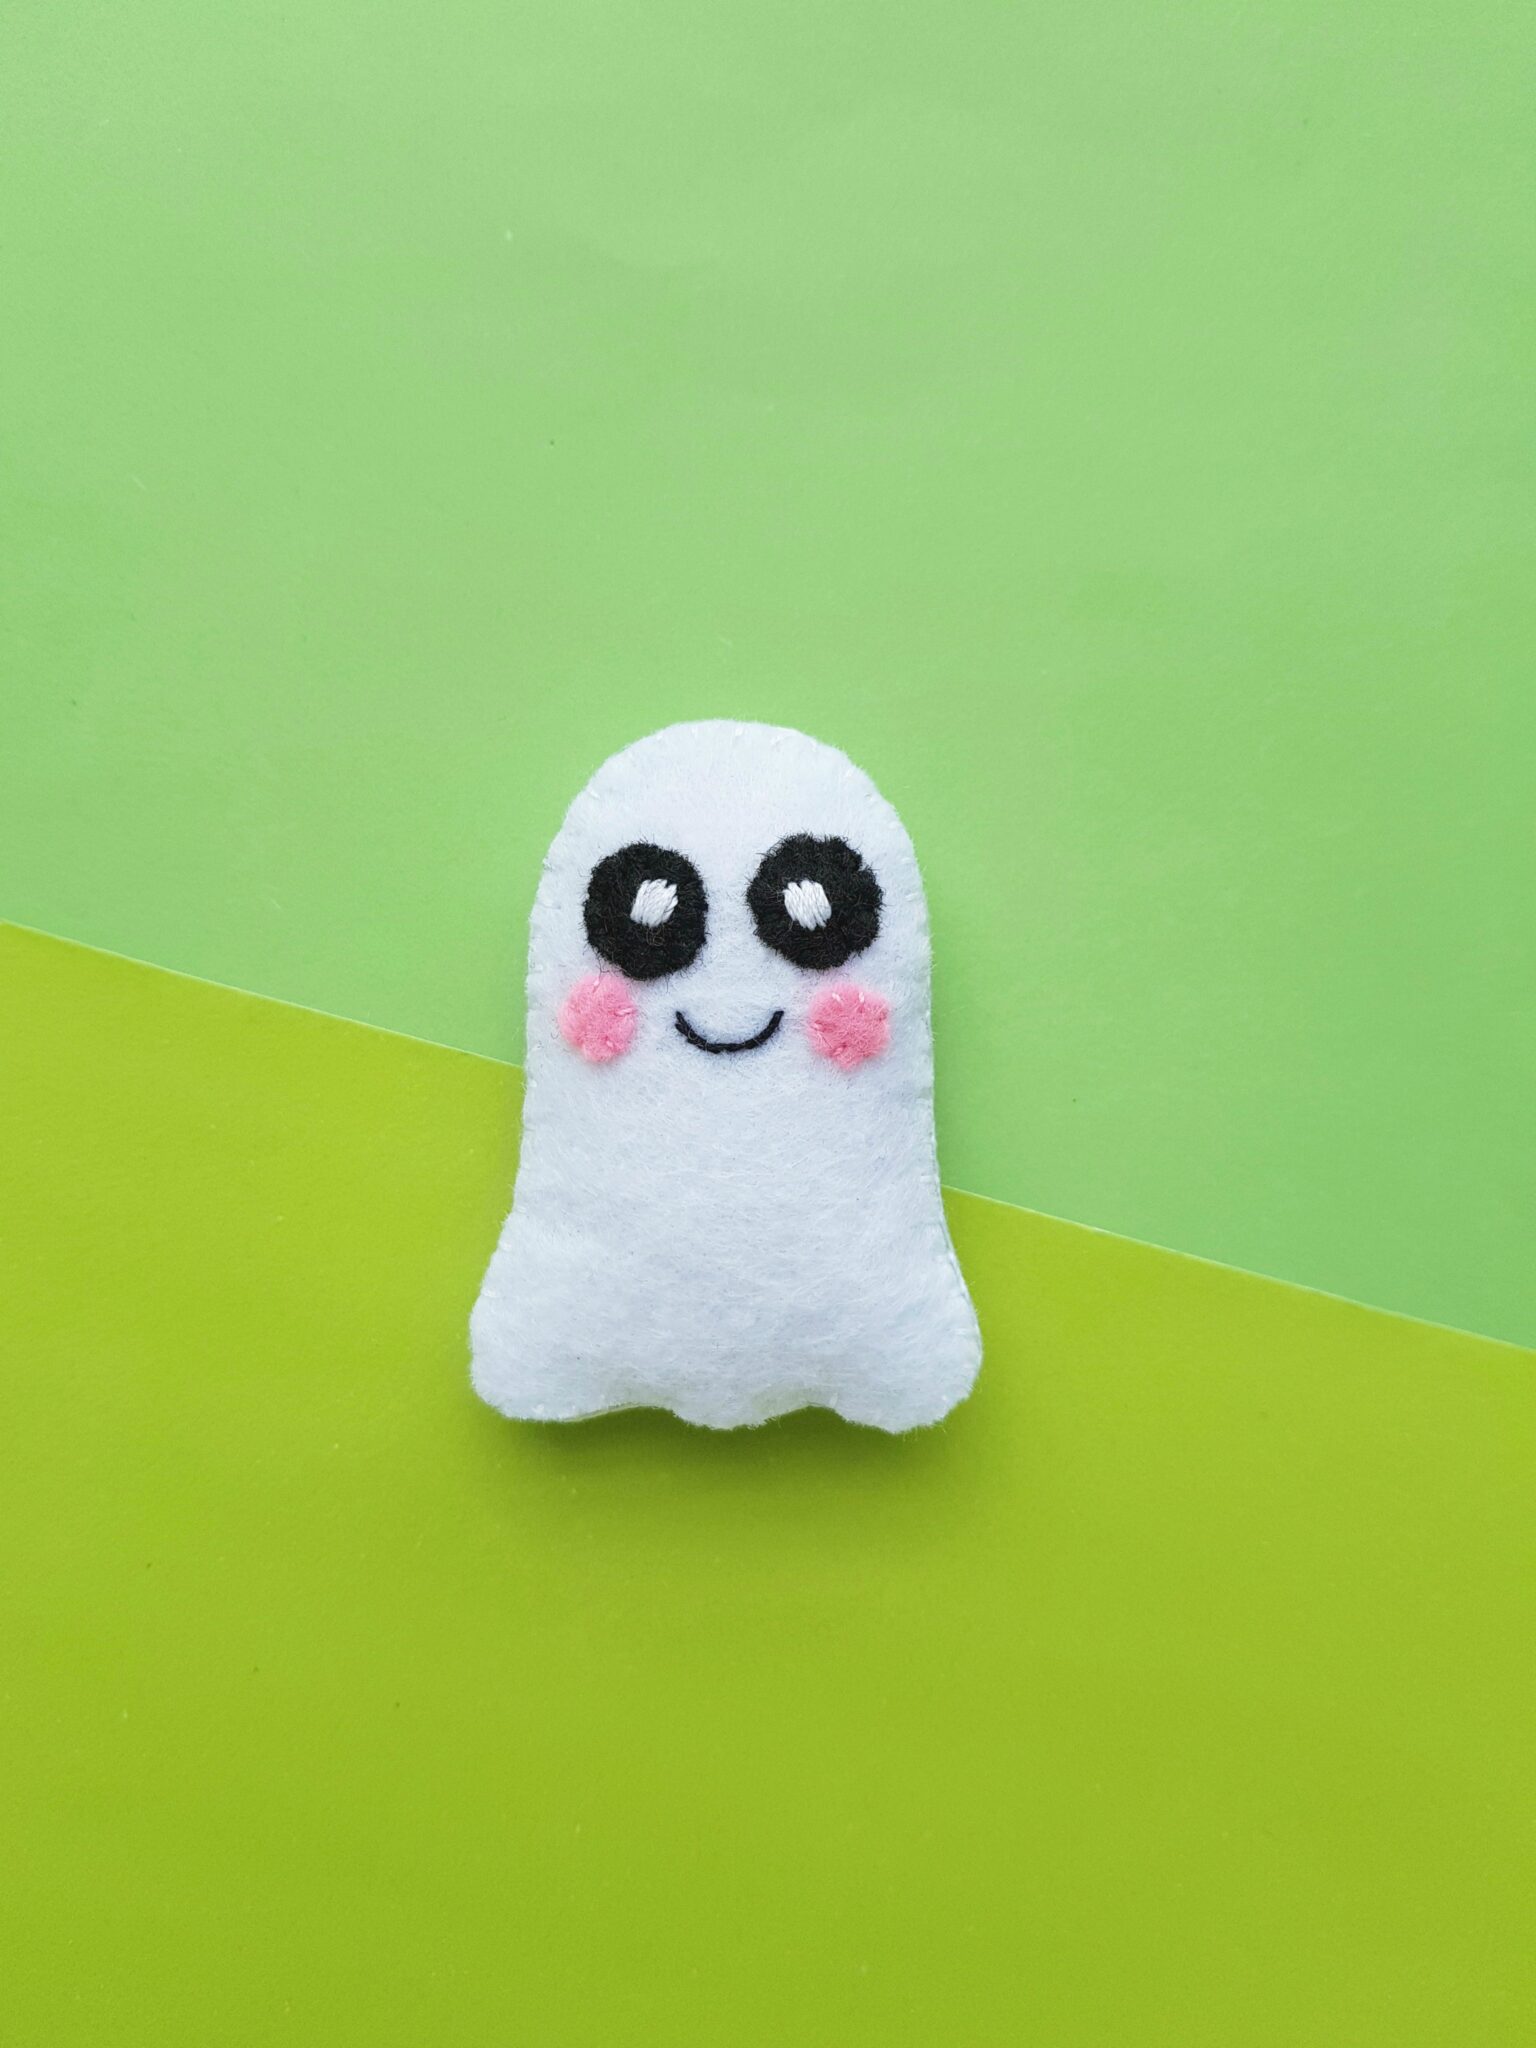 Felt Ghost Plush Craft - Whispered Inspirations